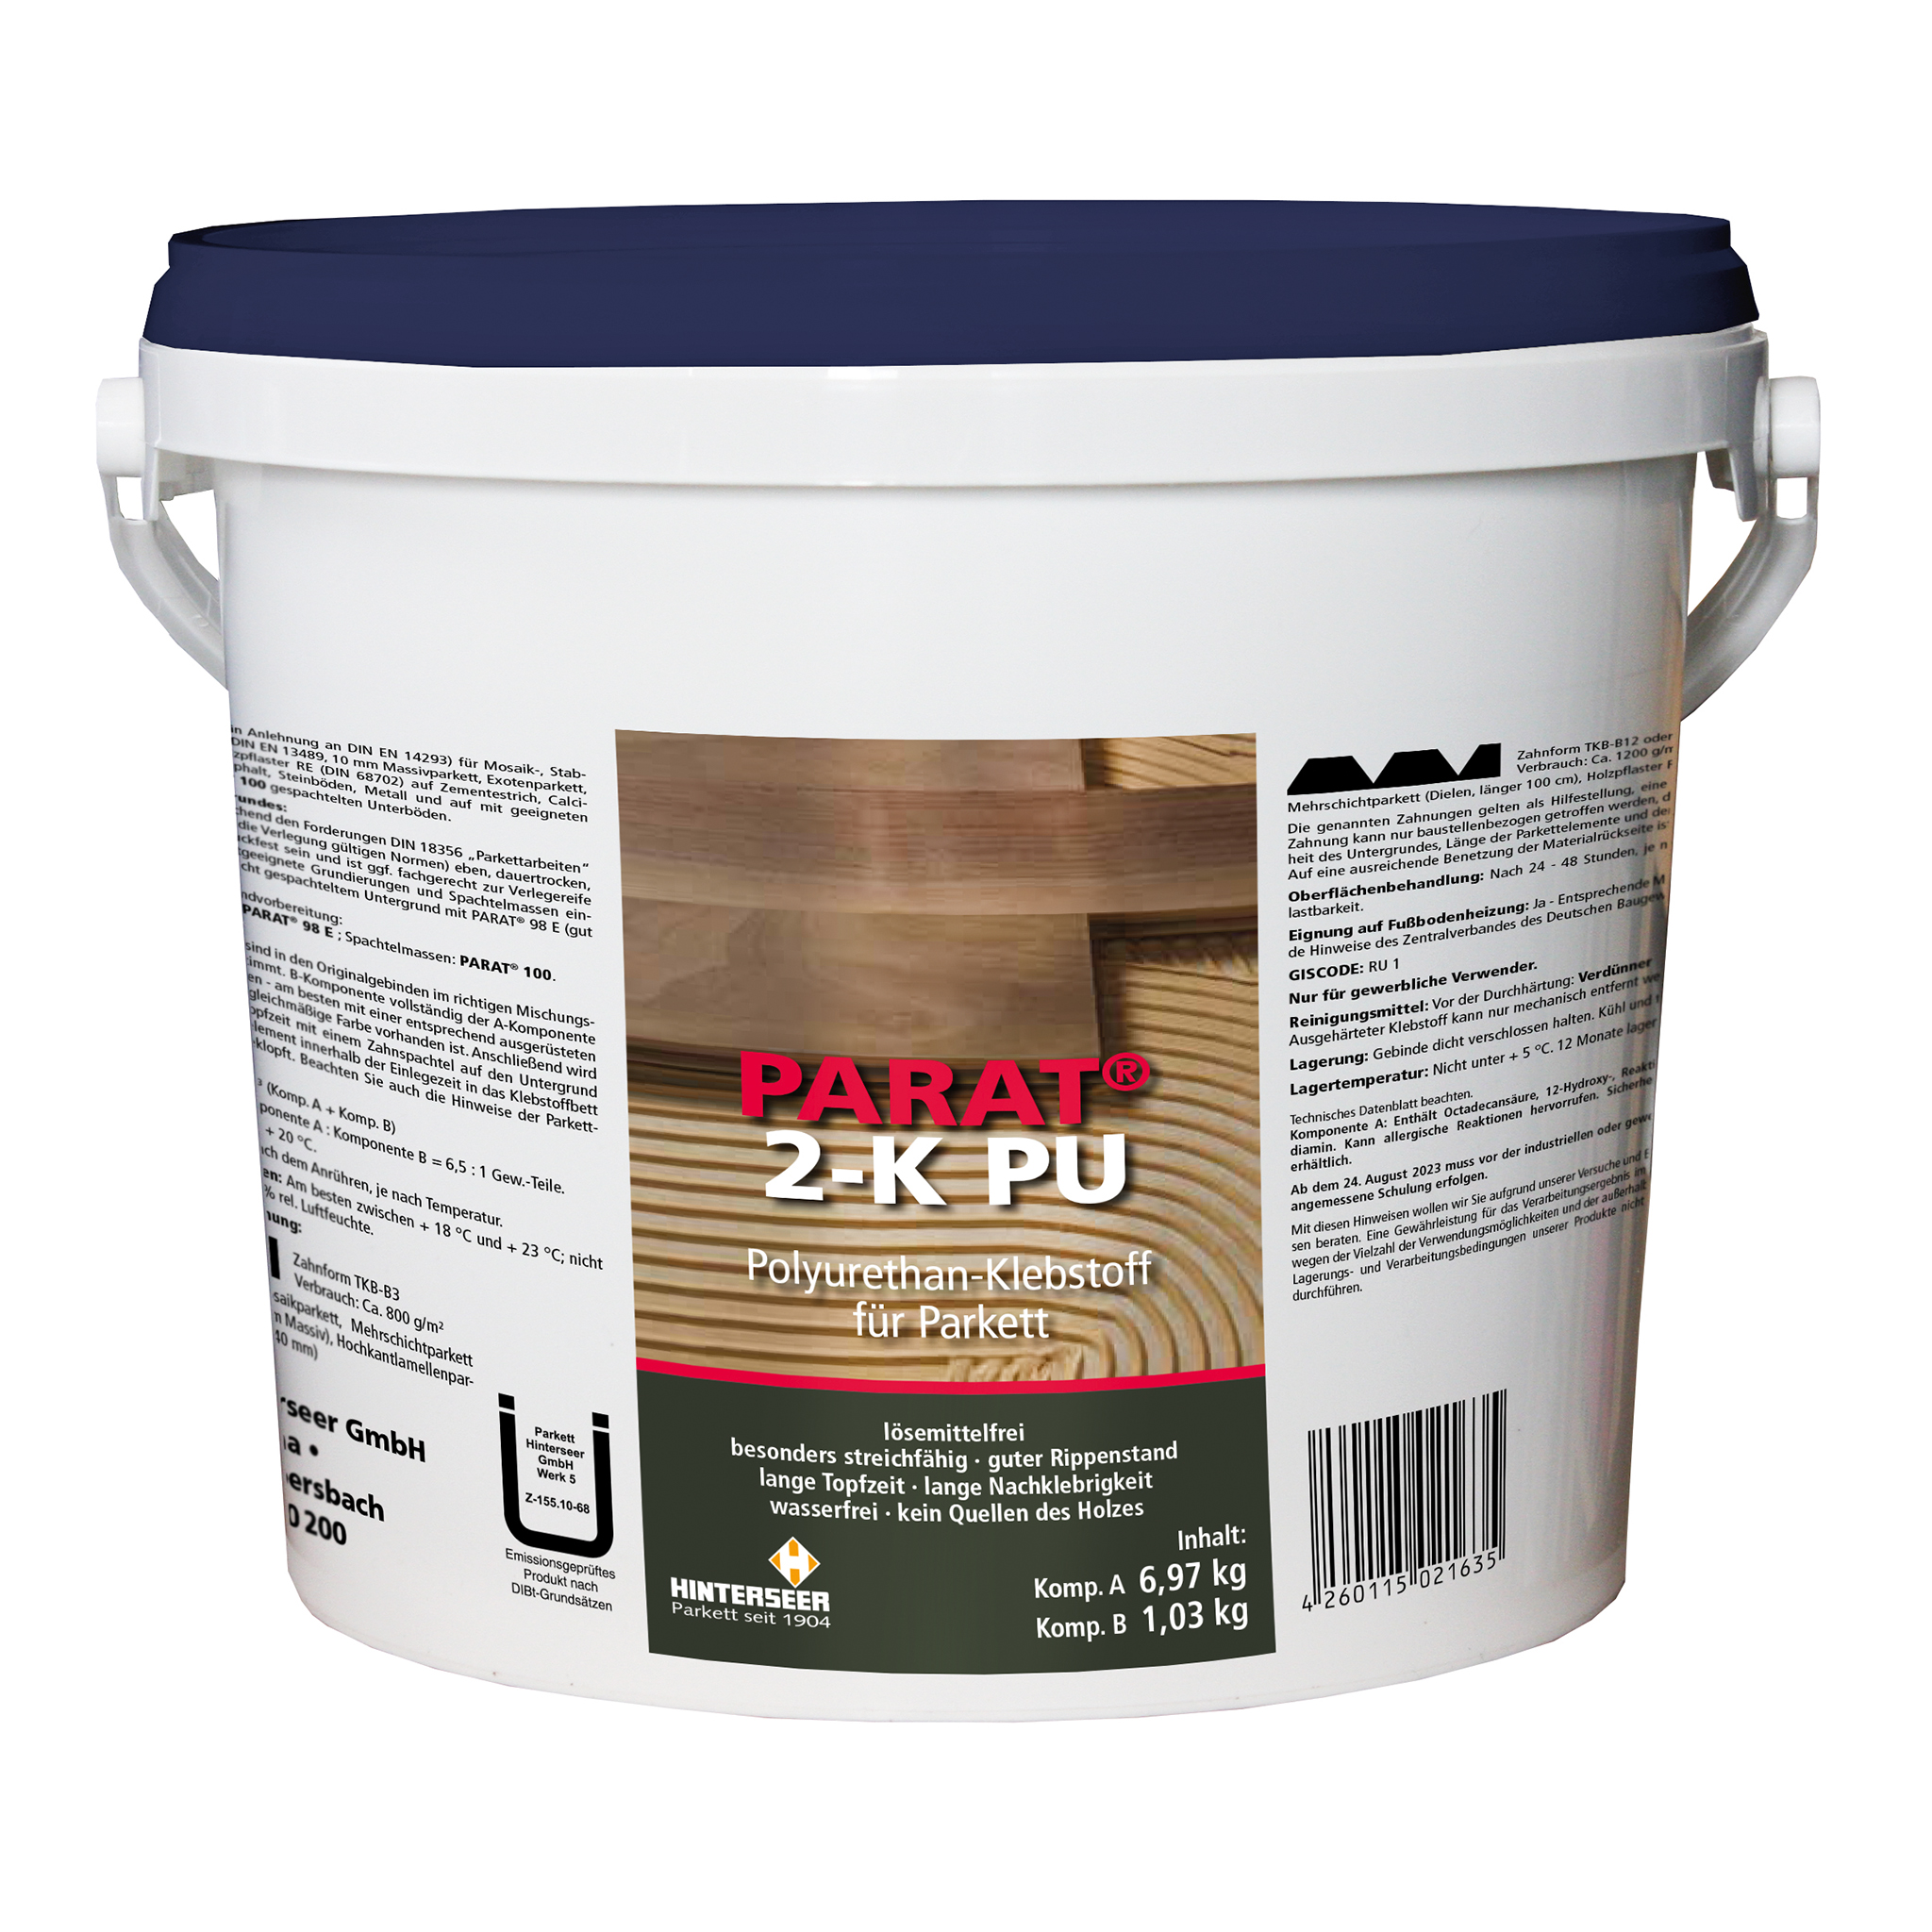 Parat 2-K PU parquet glue/laminate 8 Kg